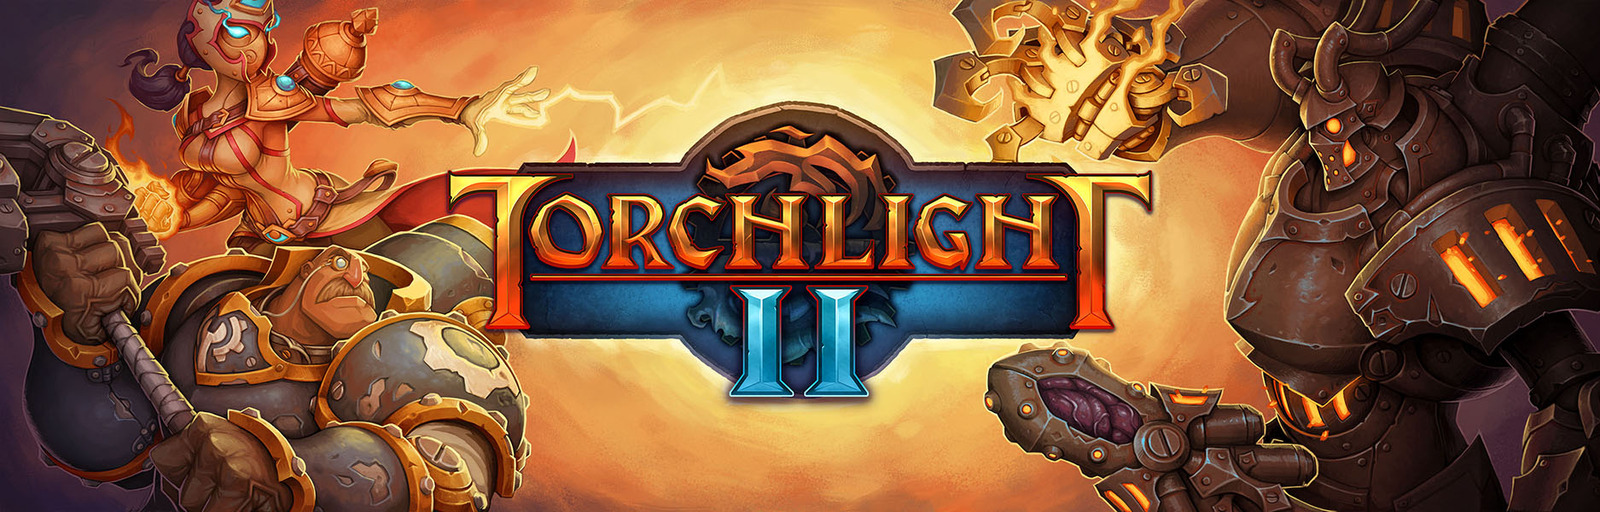 Torchlight 2 v1.25.5.2 (2012 - Rus / Eng) +1 неофициальное DLC. 